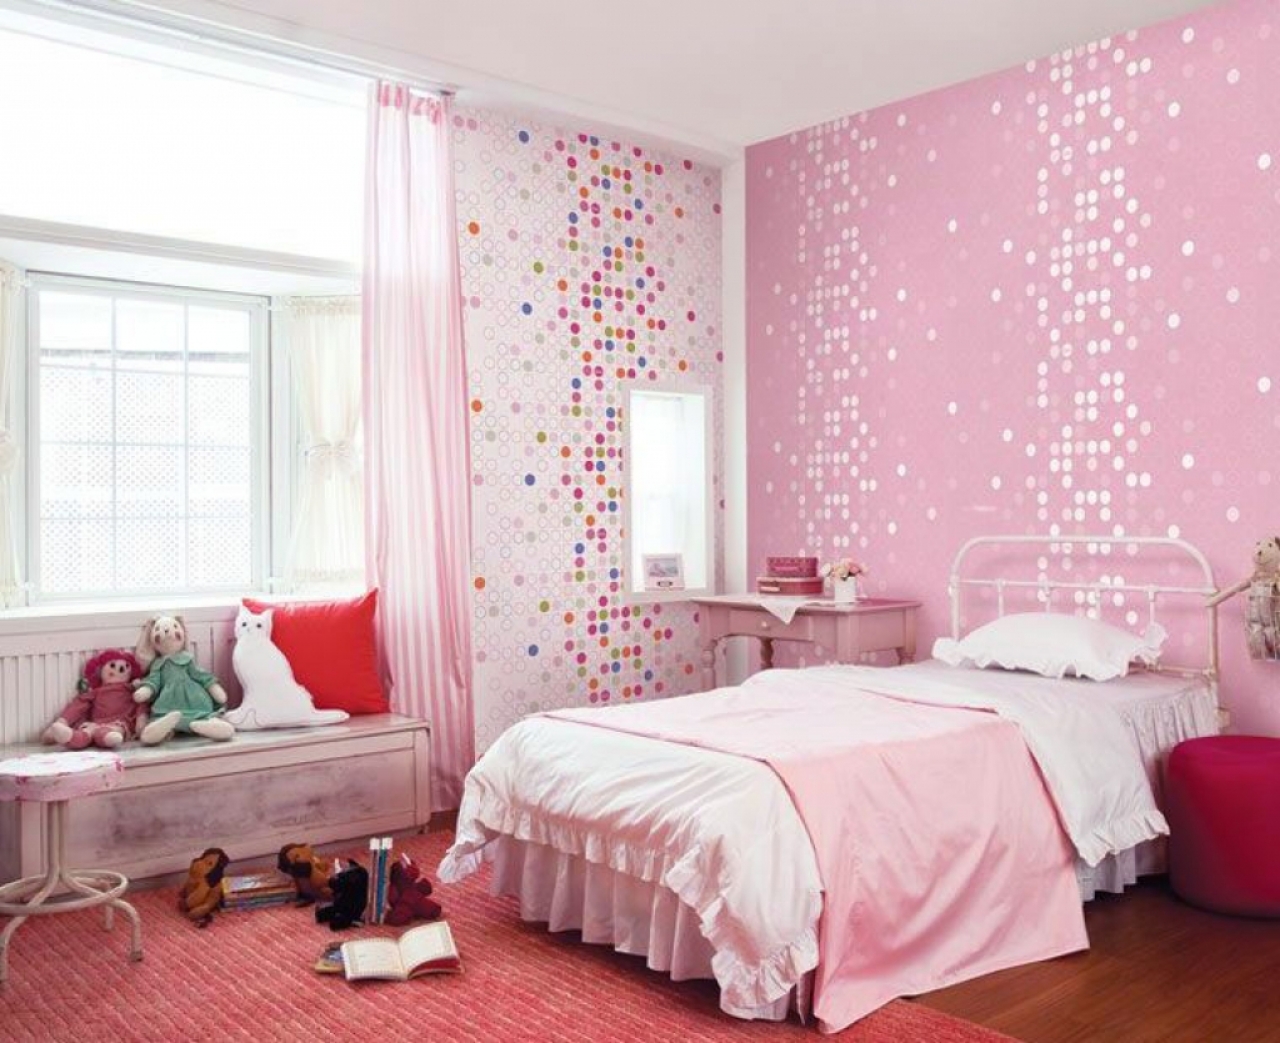 Kids room cute pink dotty wallpaper girls bedroom home design Kids